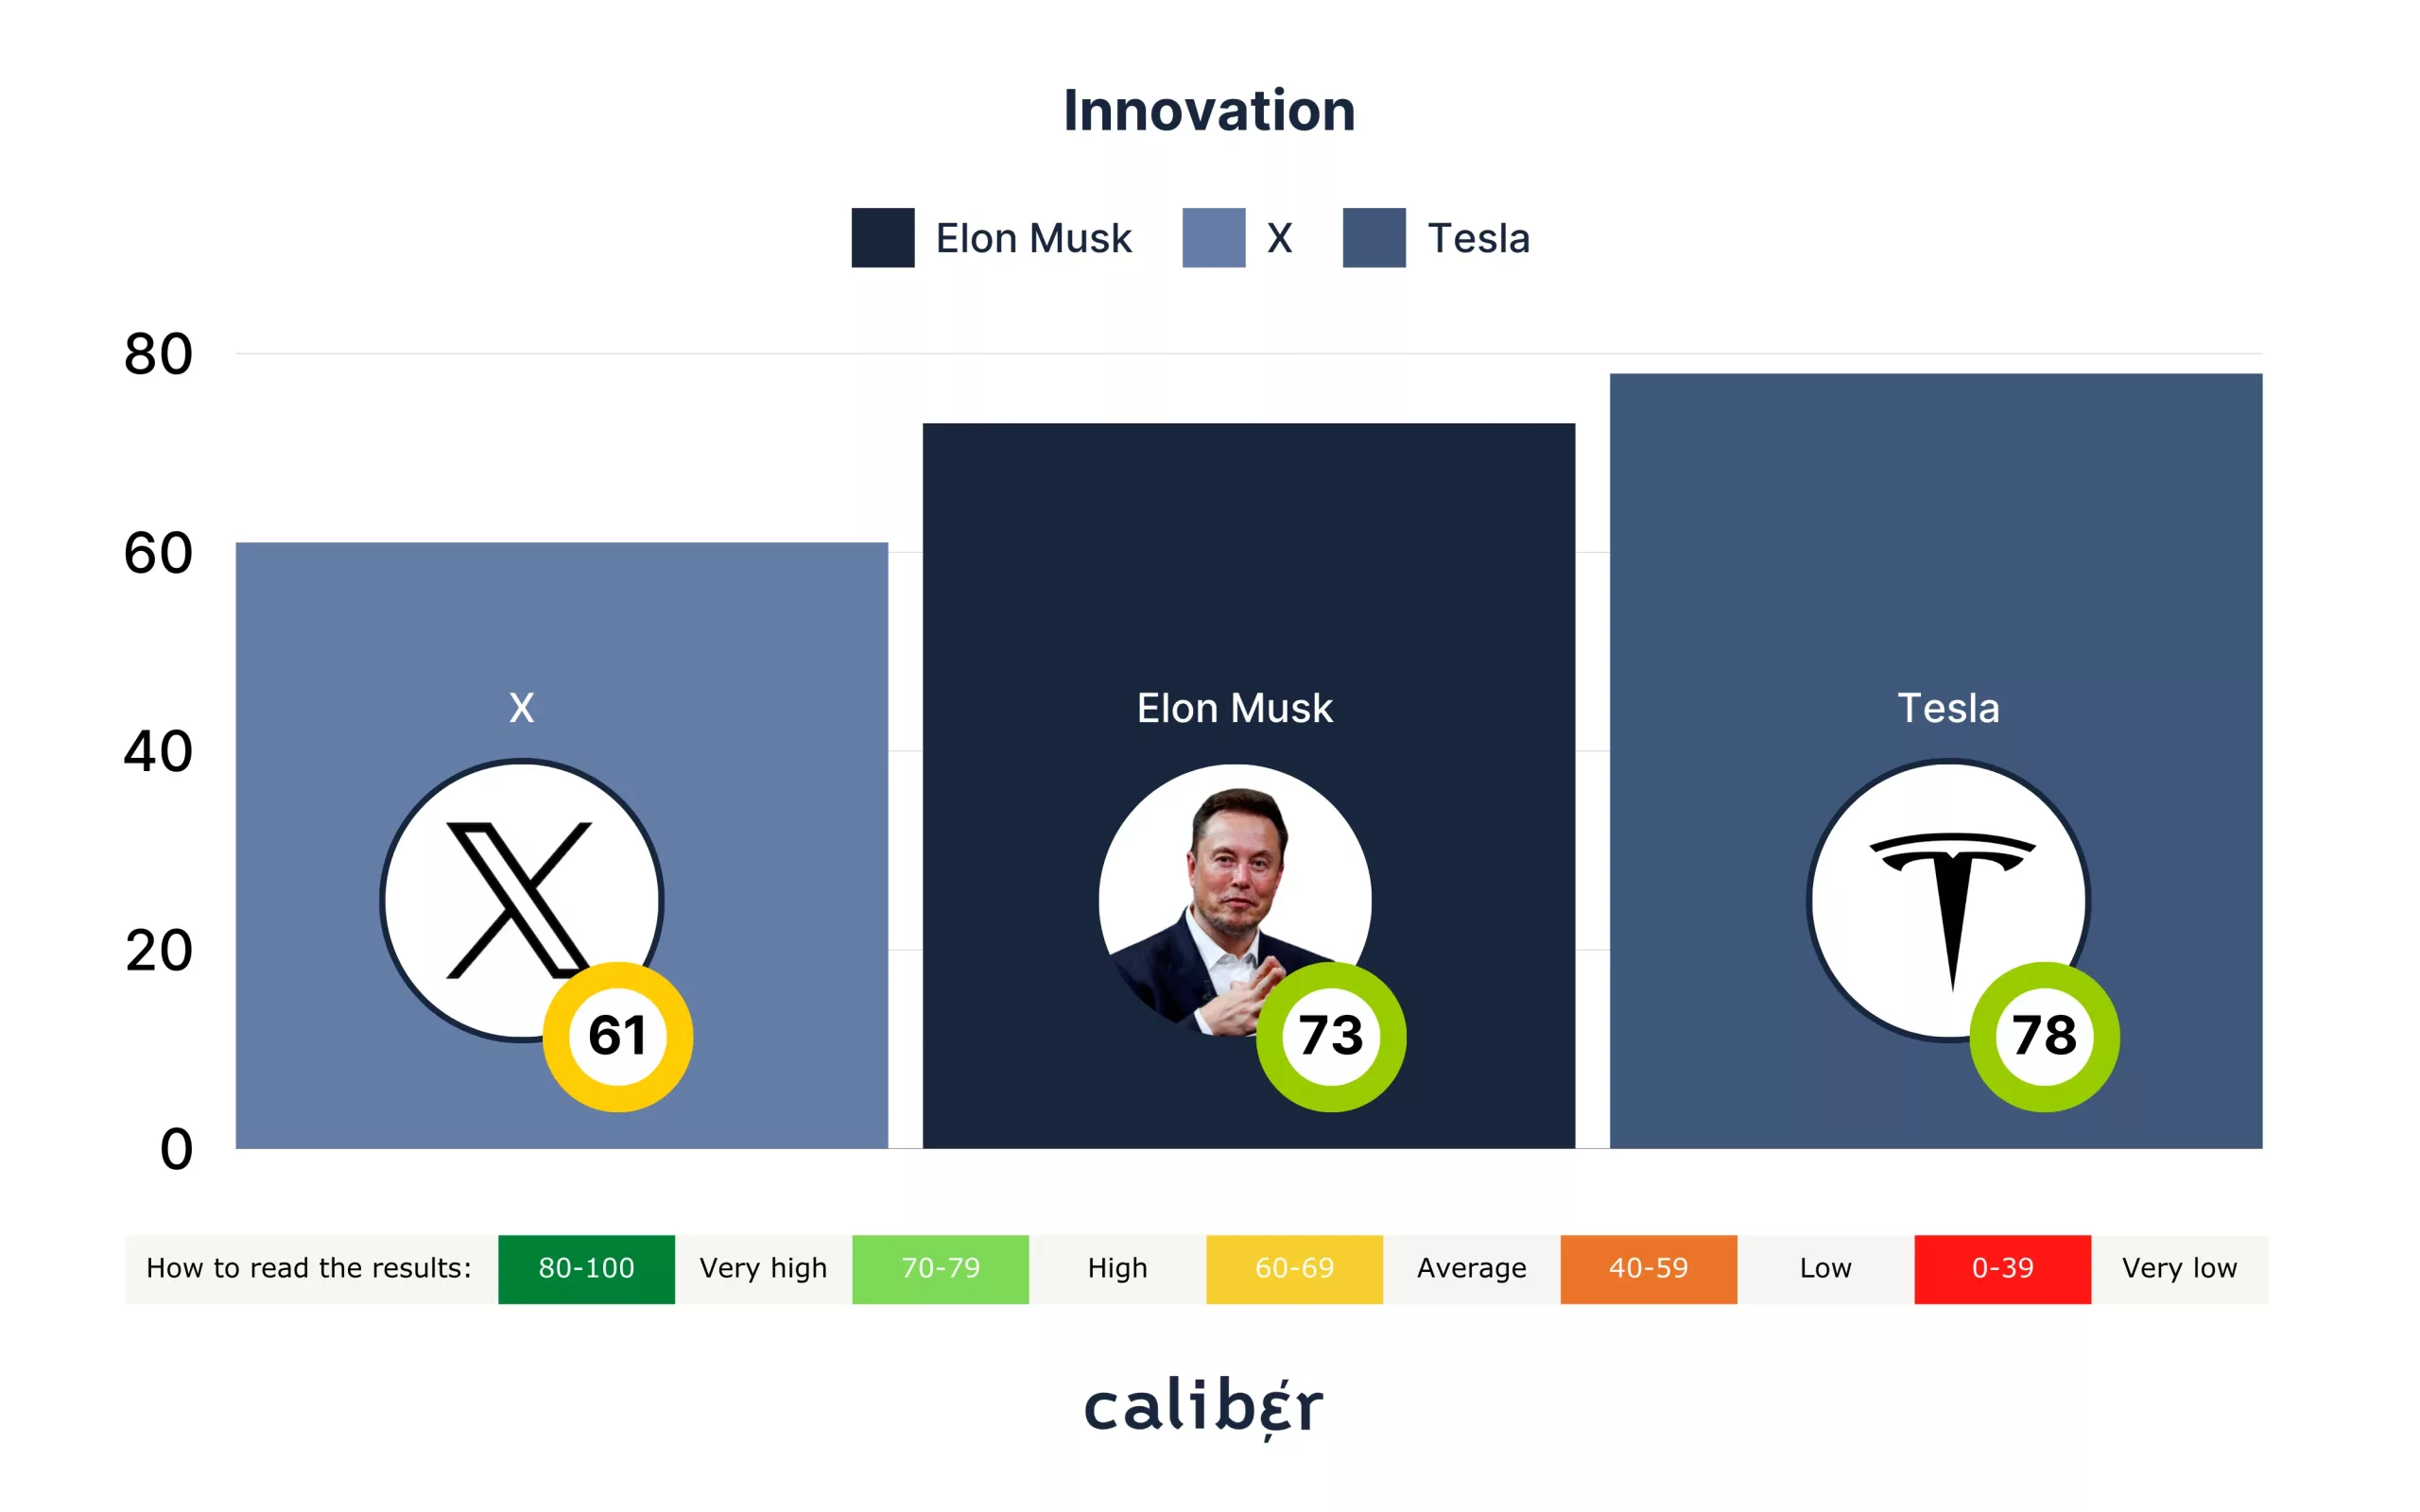 Elon Musk Innovation Score